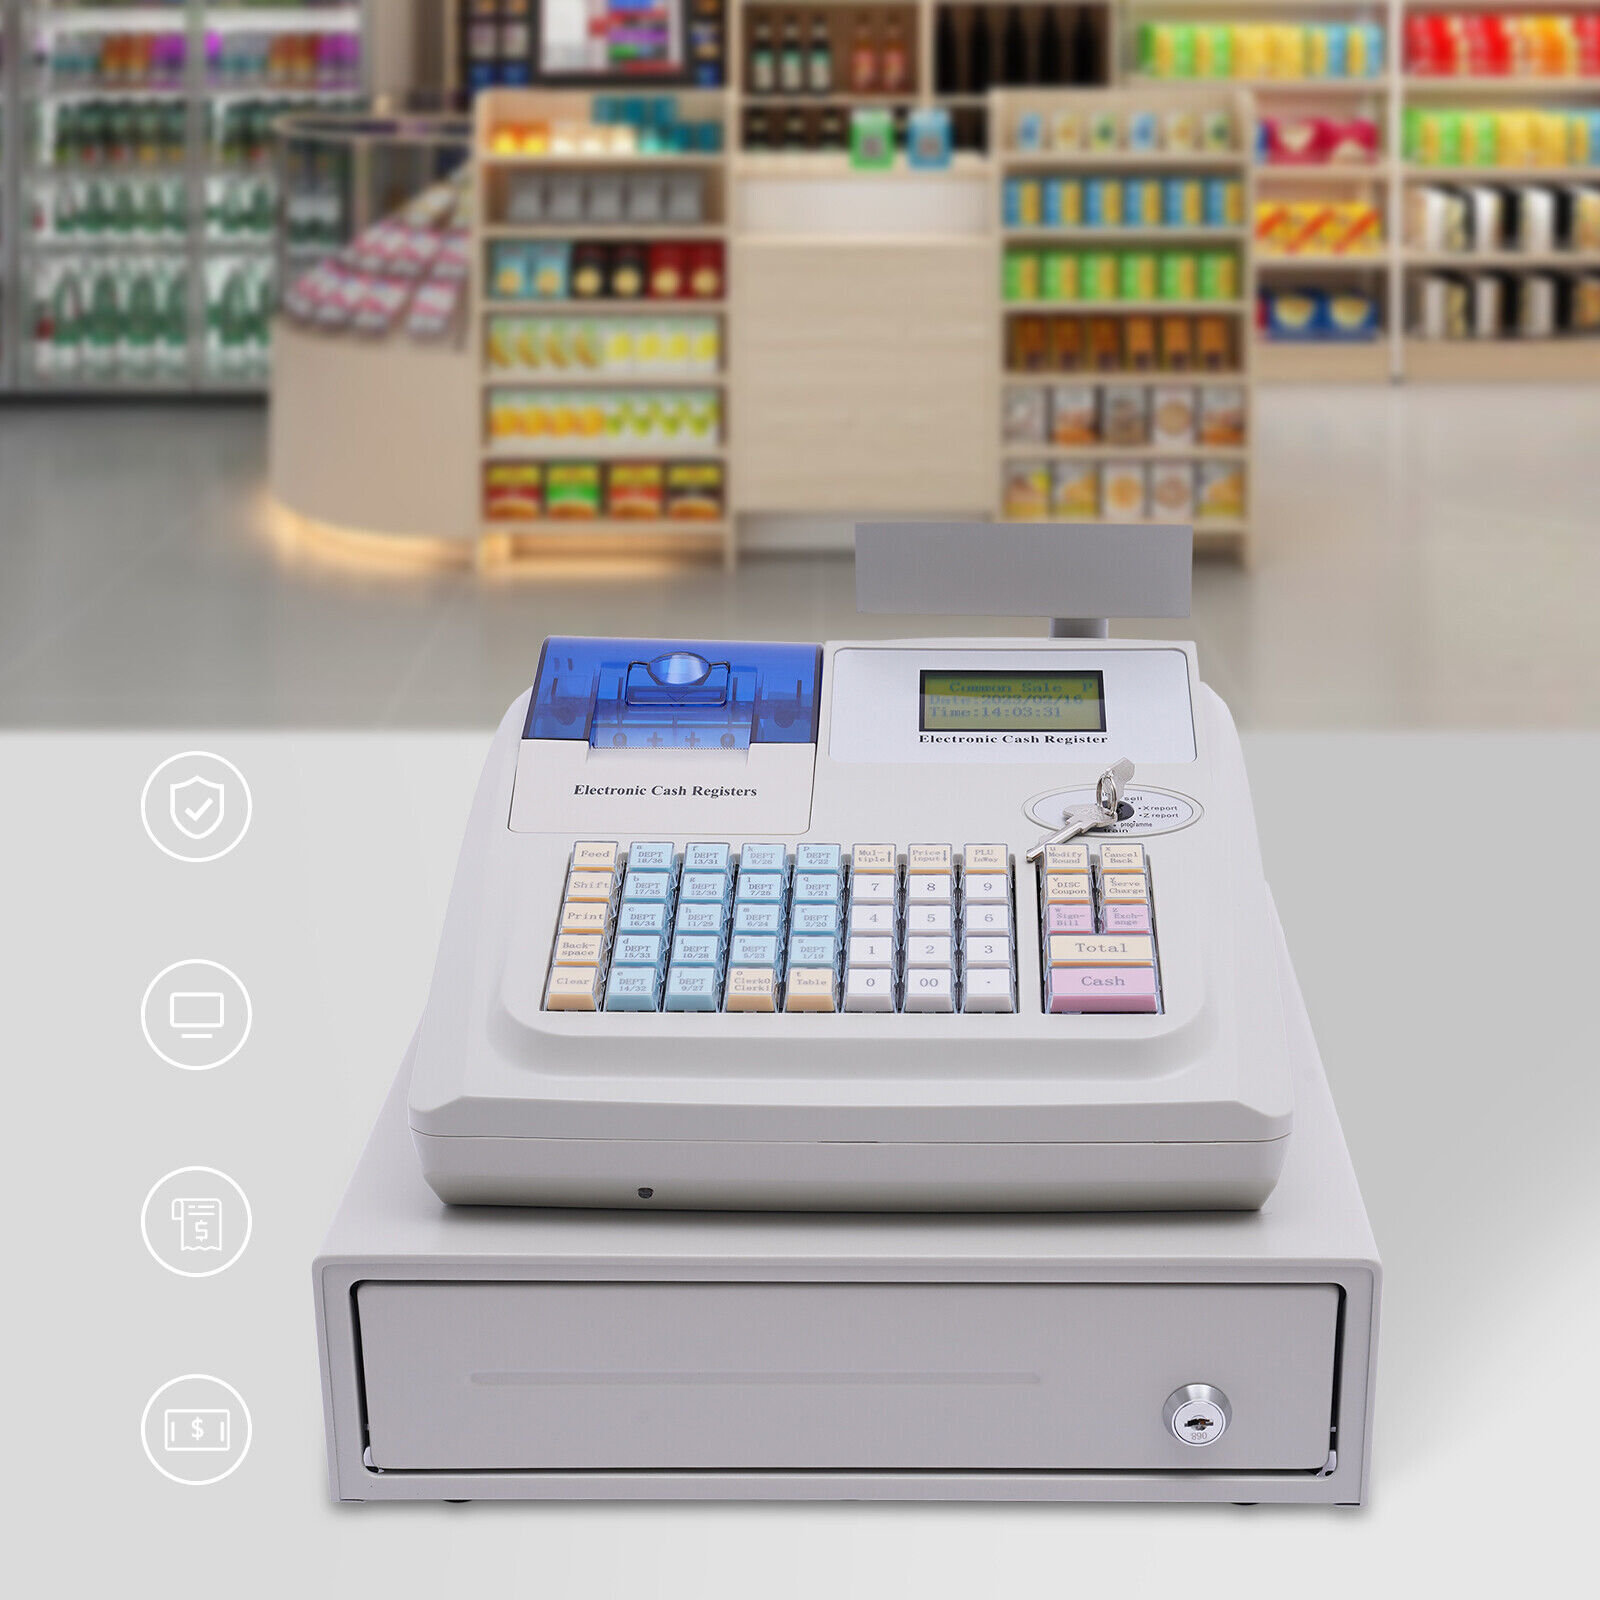 NEW Electronic Cash Register 48 Keys Cash Management System with Thermal Printer